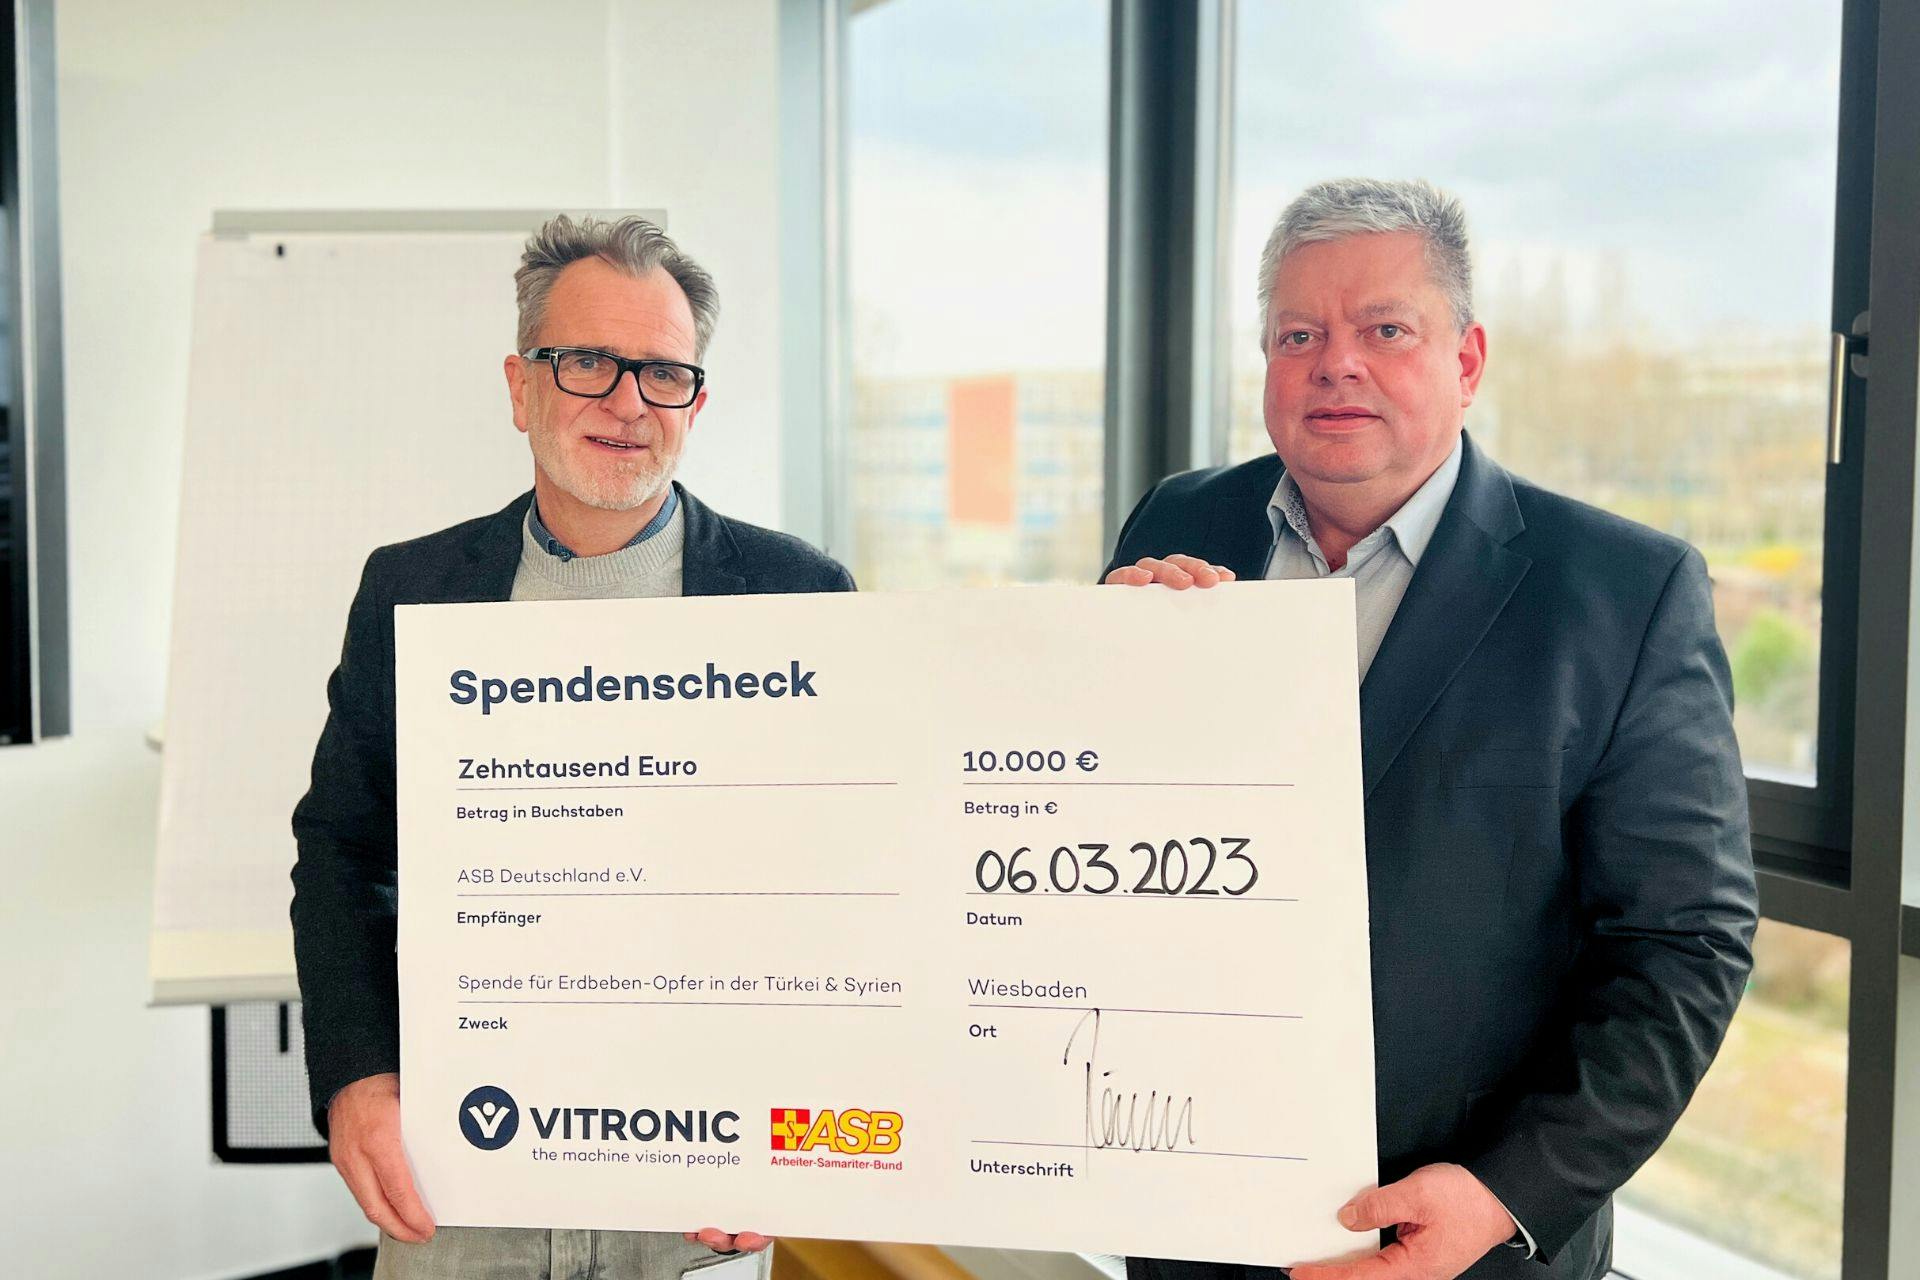 VITRONIC provides immediate aid and donates EUR 10.000 to the charitable aid and welfare organization ASB Deutschland e.V.